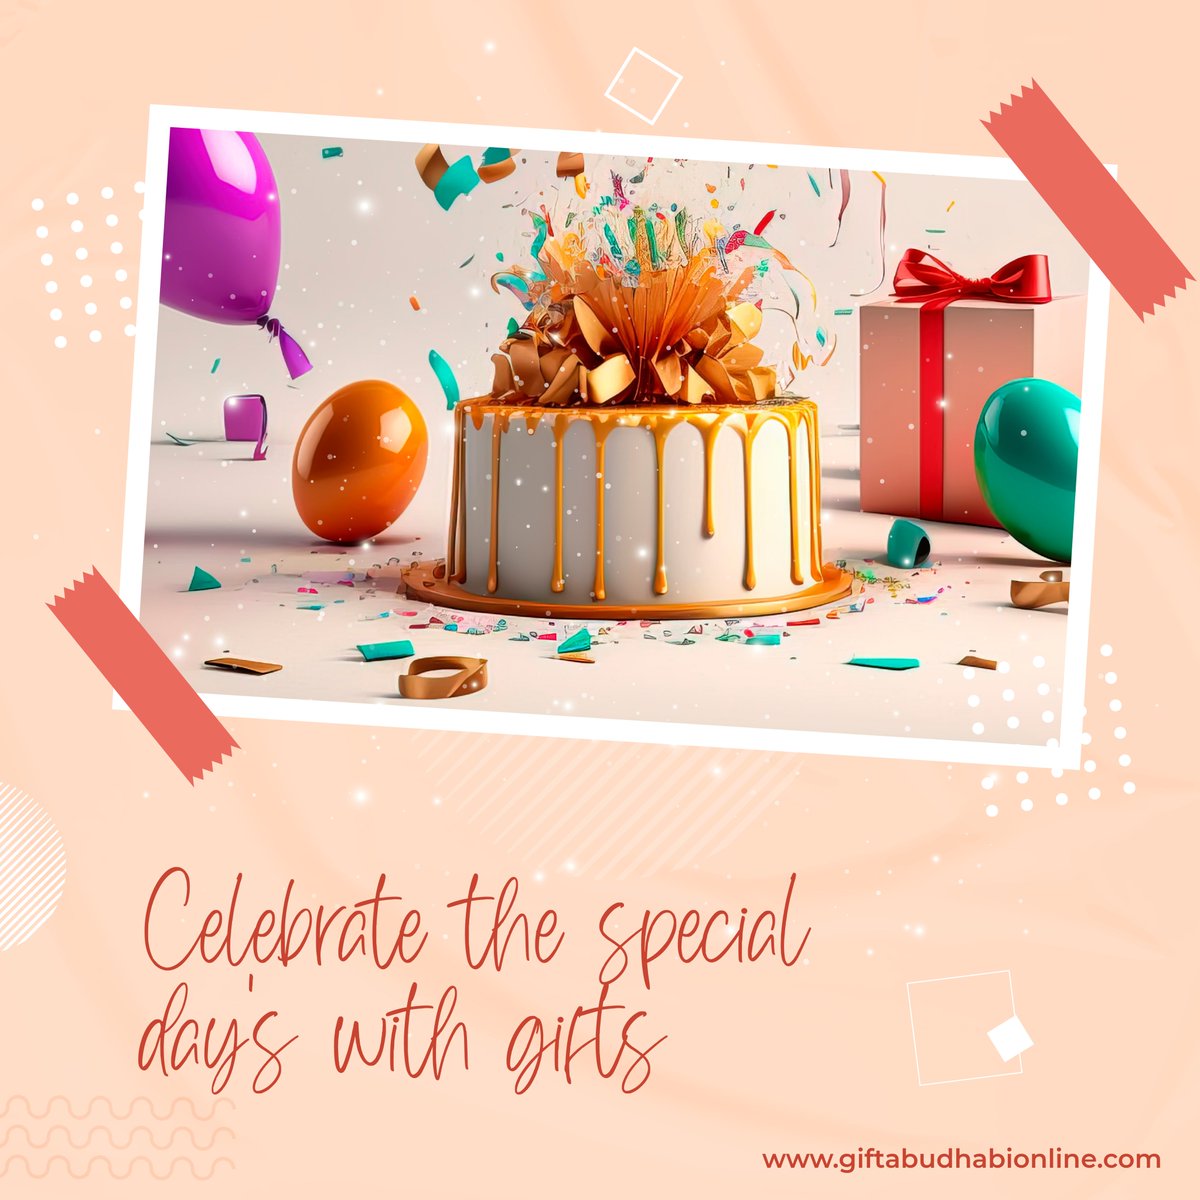 Celebrate the special day's with gifts
Order Now: cakegallery.qa
#cake #cakes #cakedelivery #customizedcakes #designercake #birthdaycake #cakedesign #cupcakes #chocolate #delicious #birthday #sweet #weddingcake #cakeart #fondant #cakeshop #cakeslover #cakesforkids